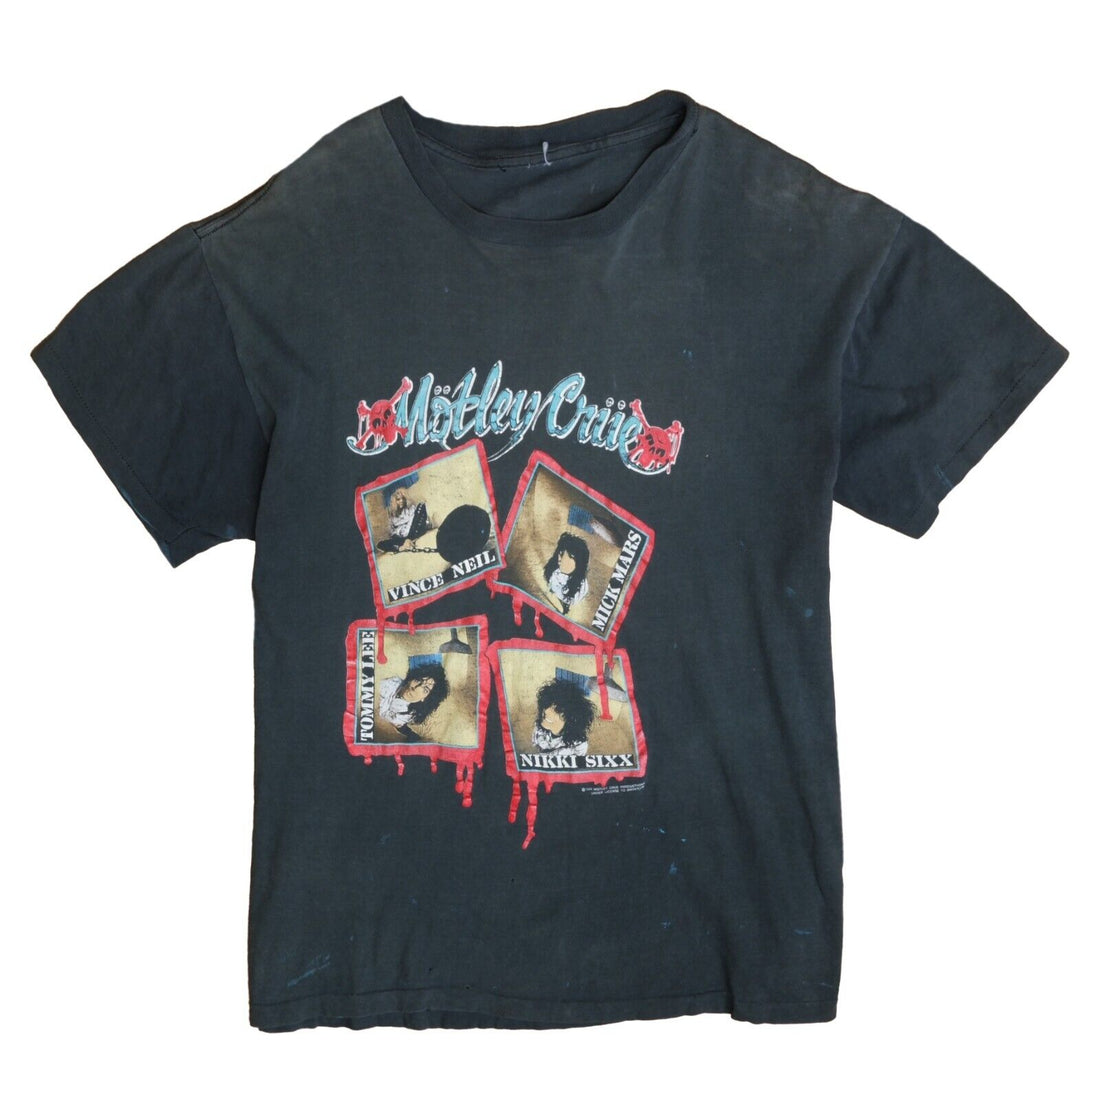 Vintage Motley Crue Kick Start My Heart T-Shirt Size Medium Band Tee 1989 80s